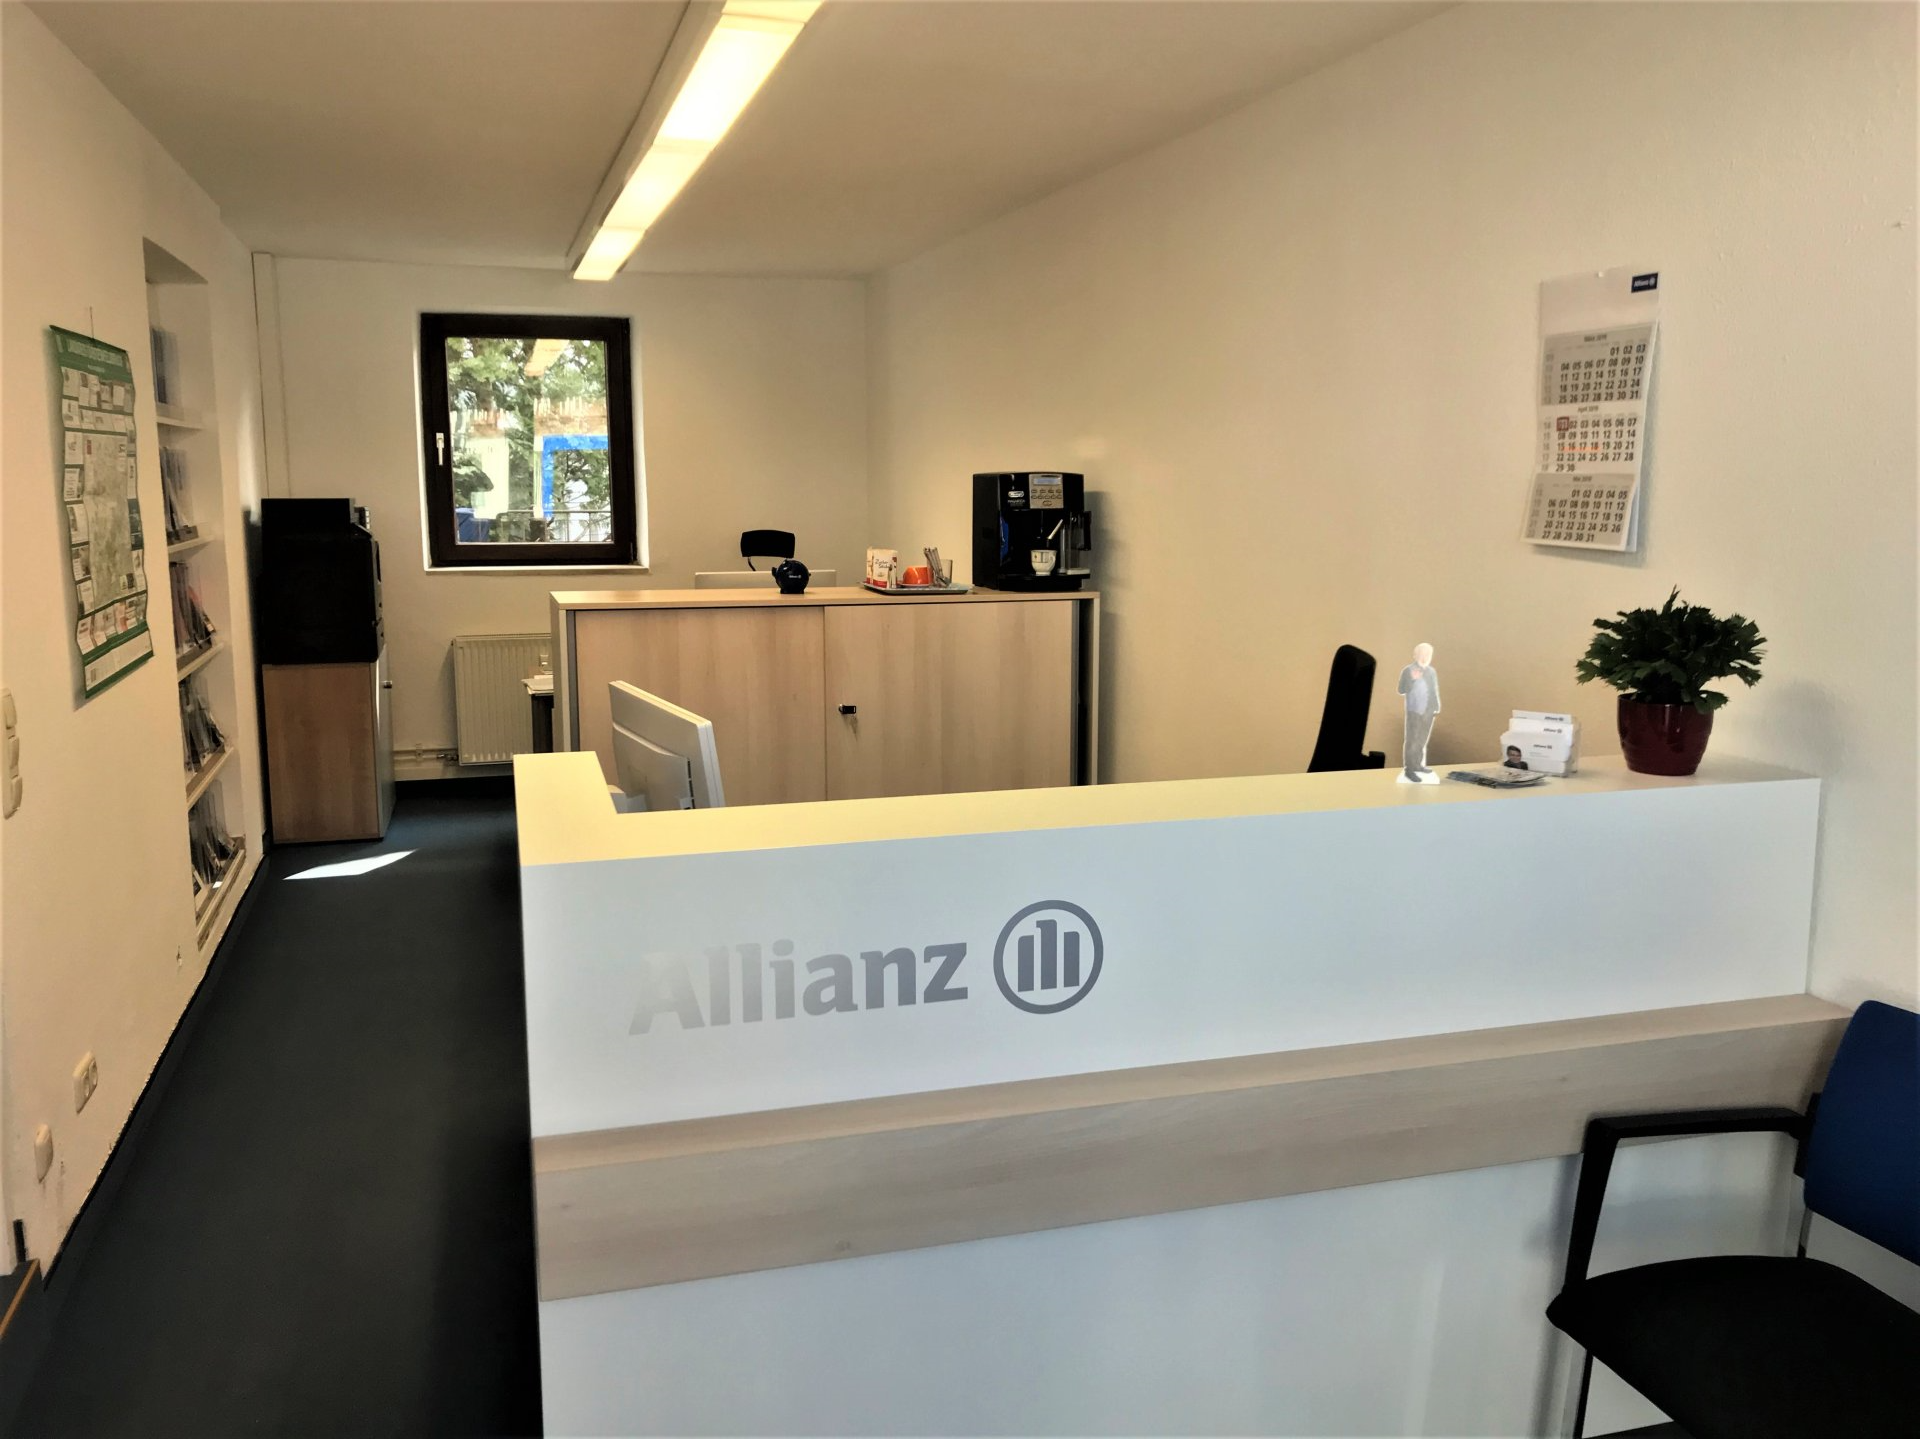 Allianz Versicherung Felix Schuler Hauptvertretung